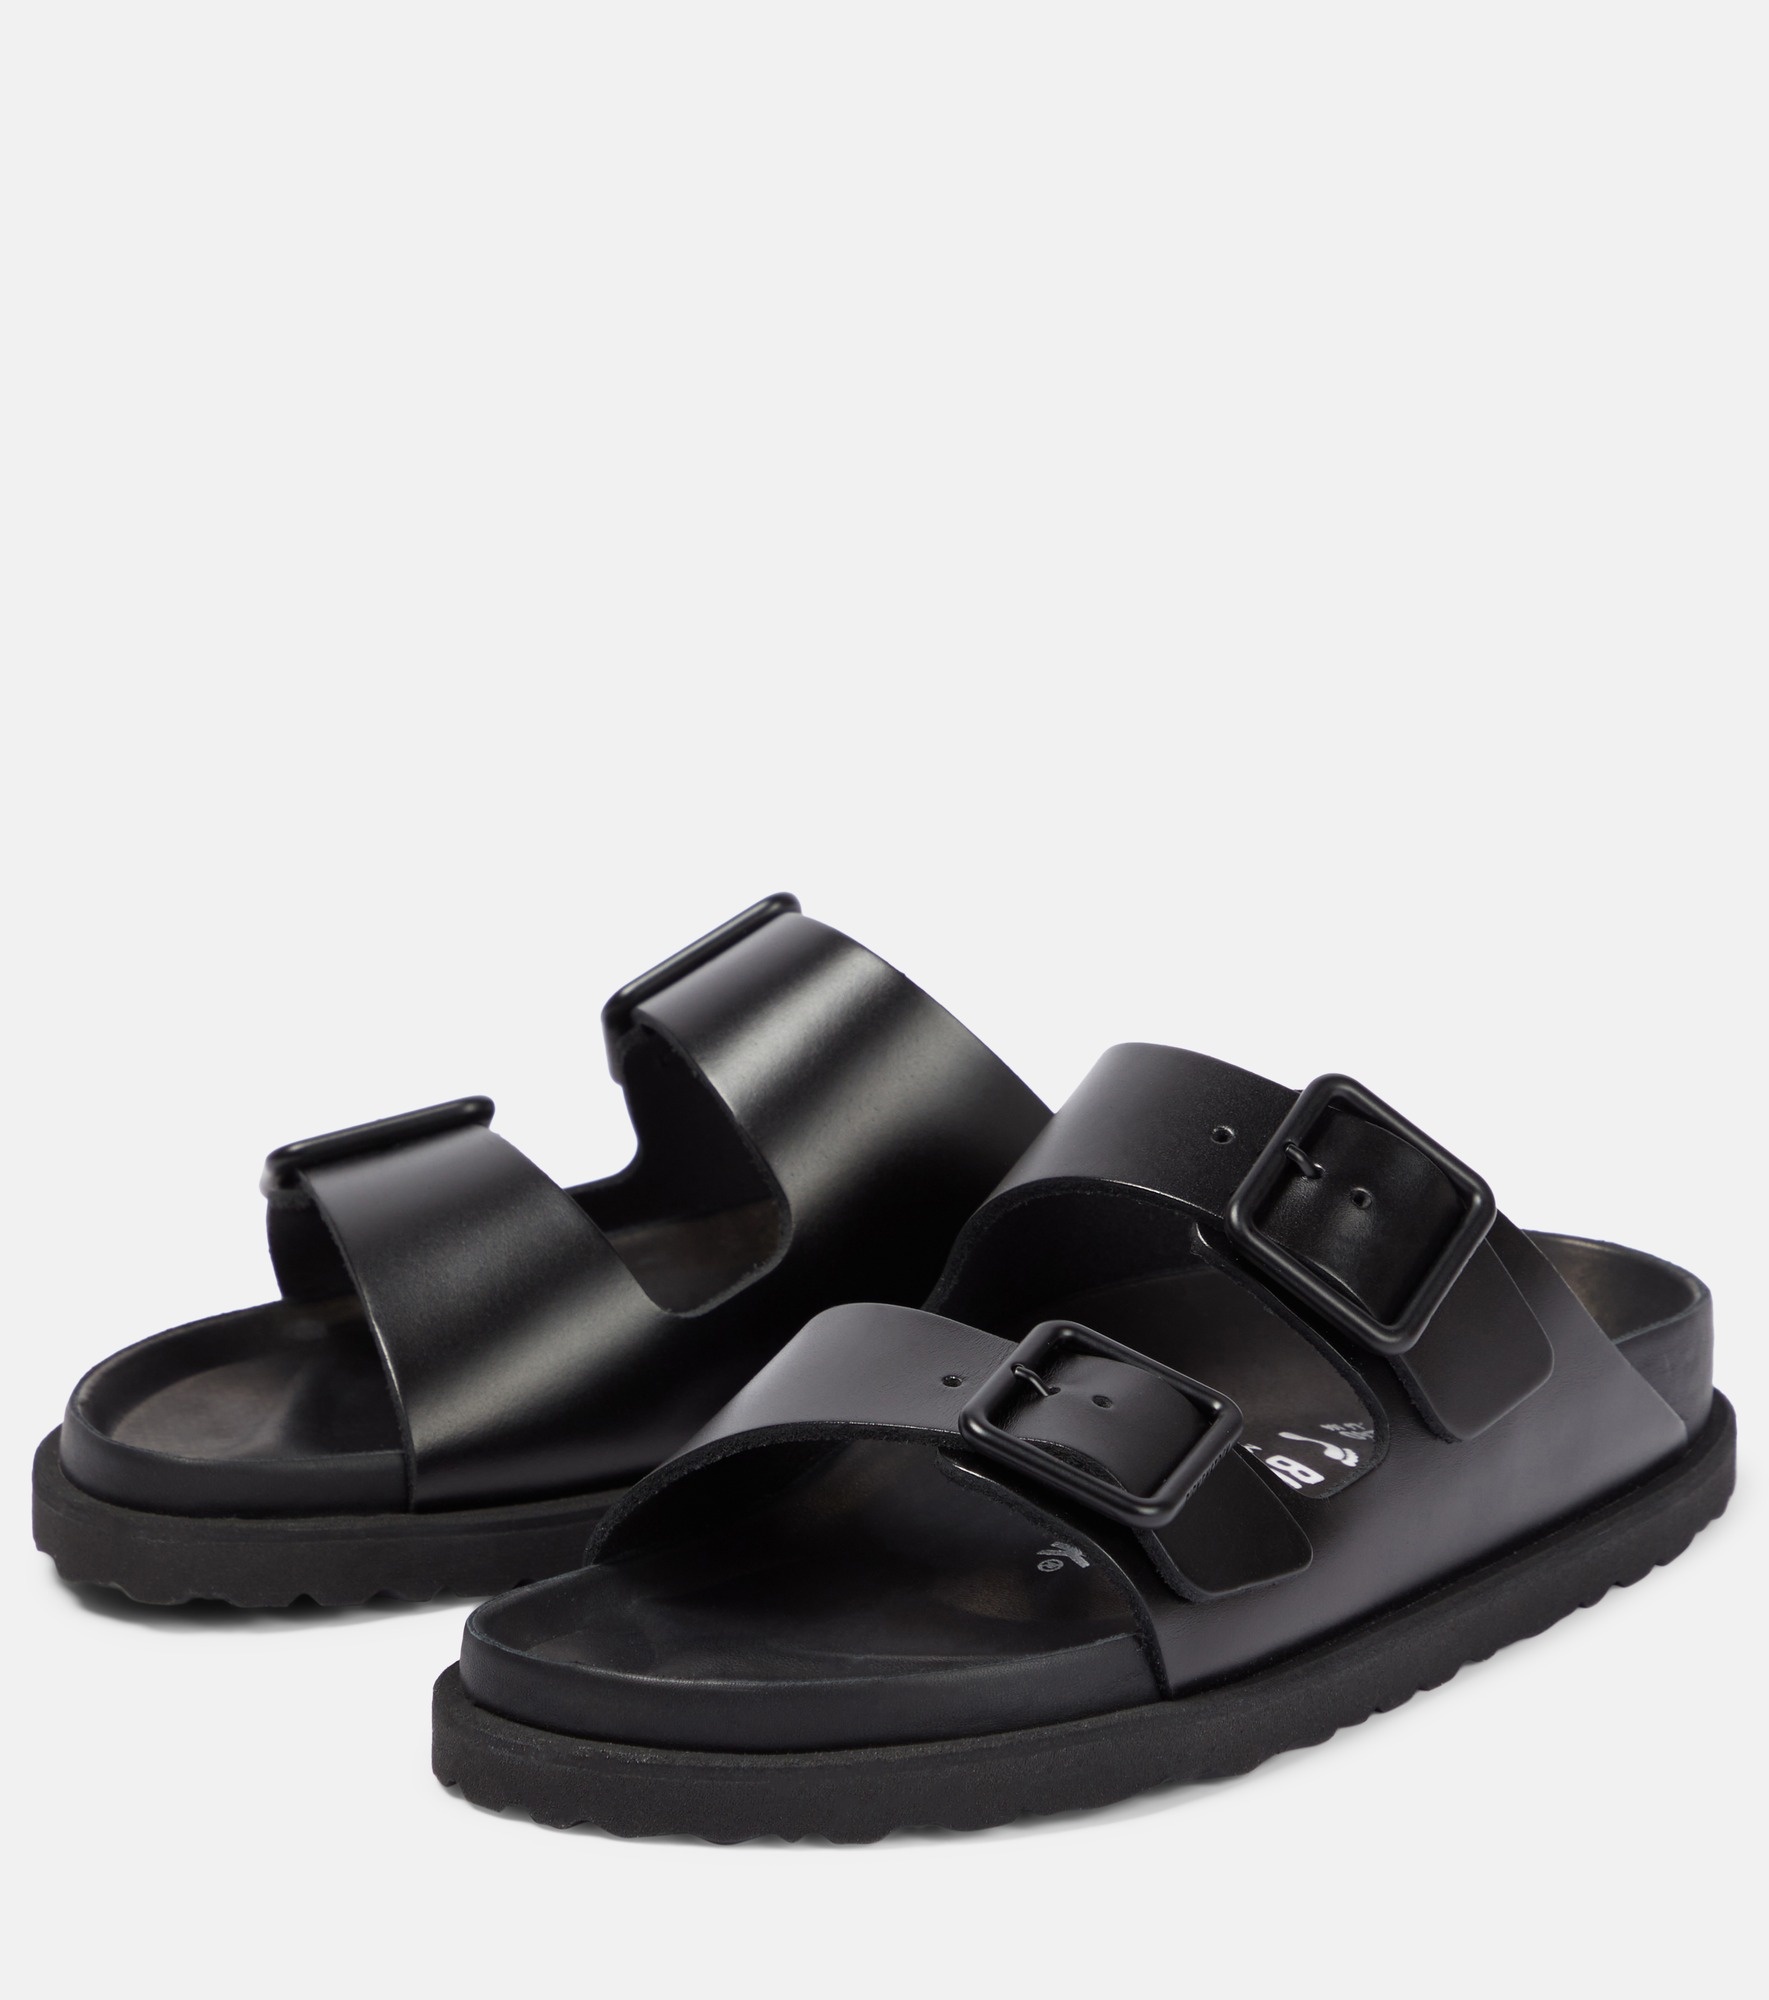 Arizona leather sandals - 5